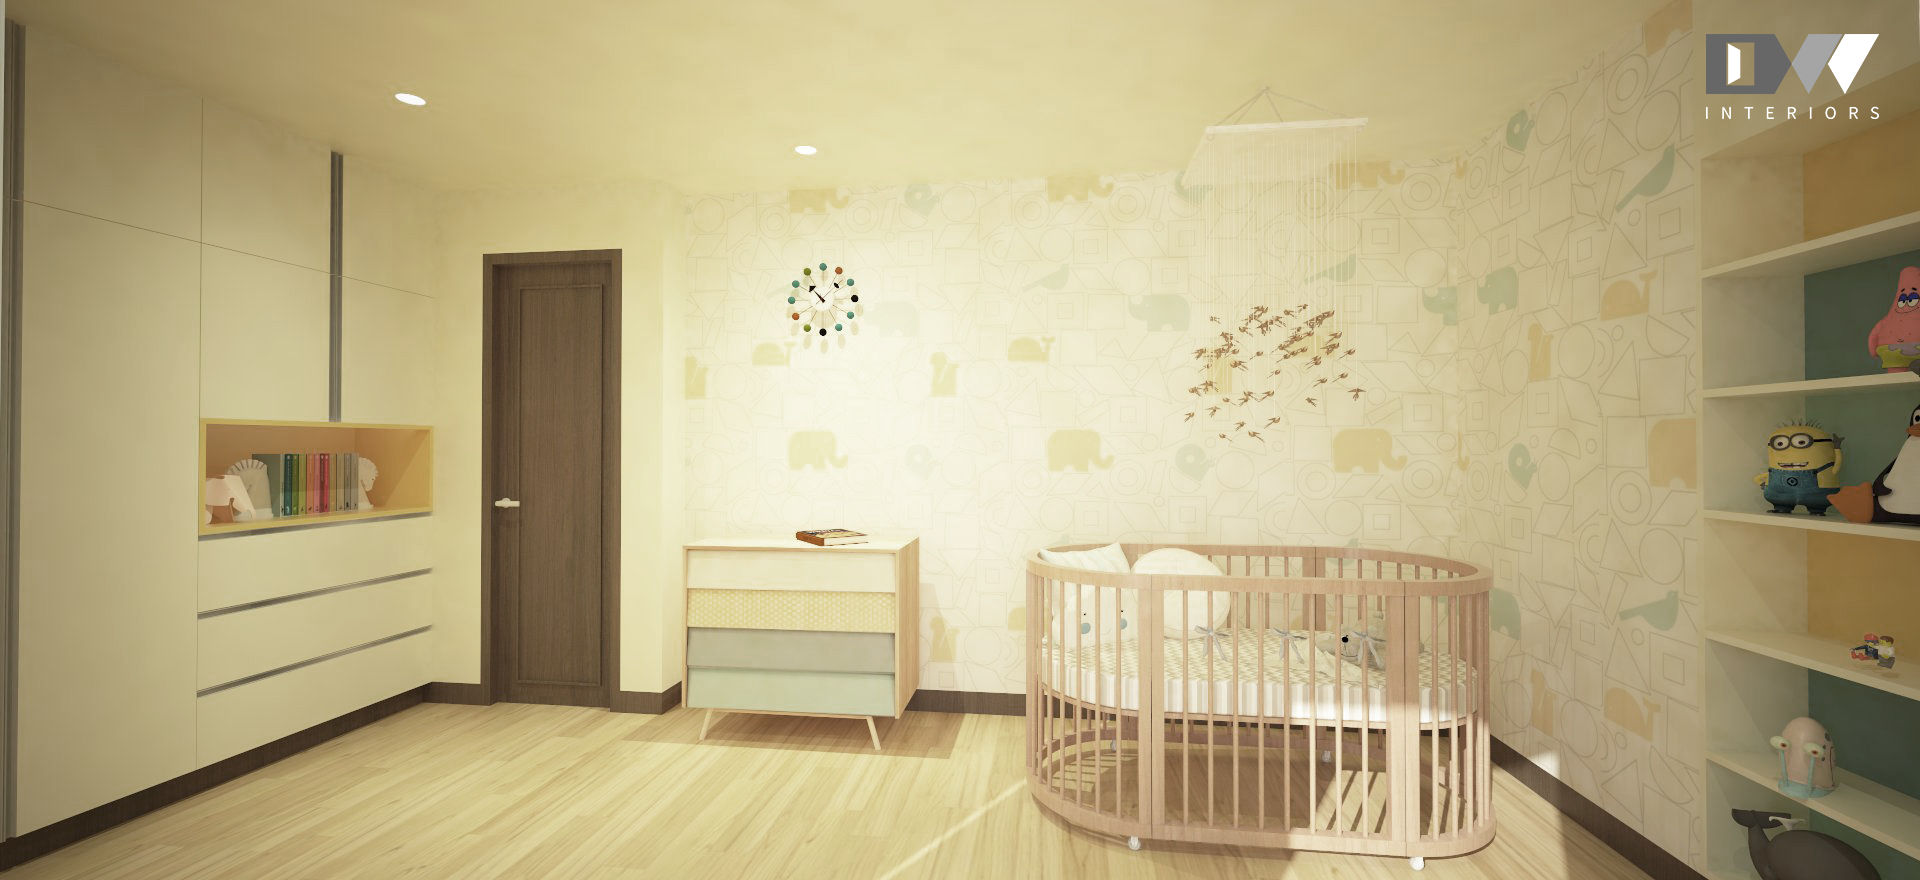 S Residence, DW Interiors DW Interiors Chambre d'enfant minimaliste